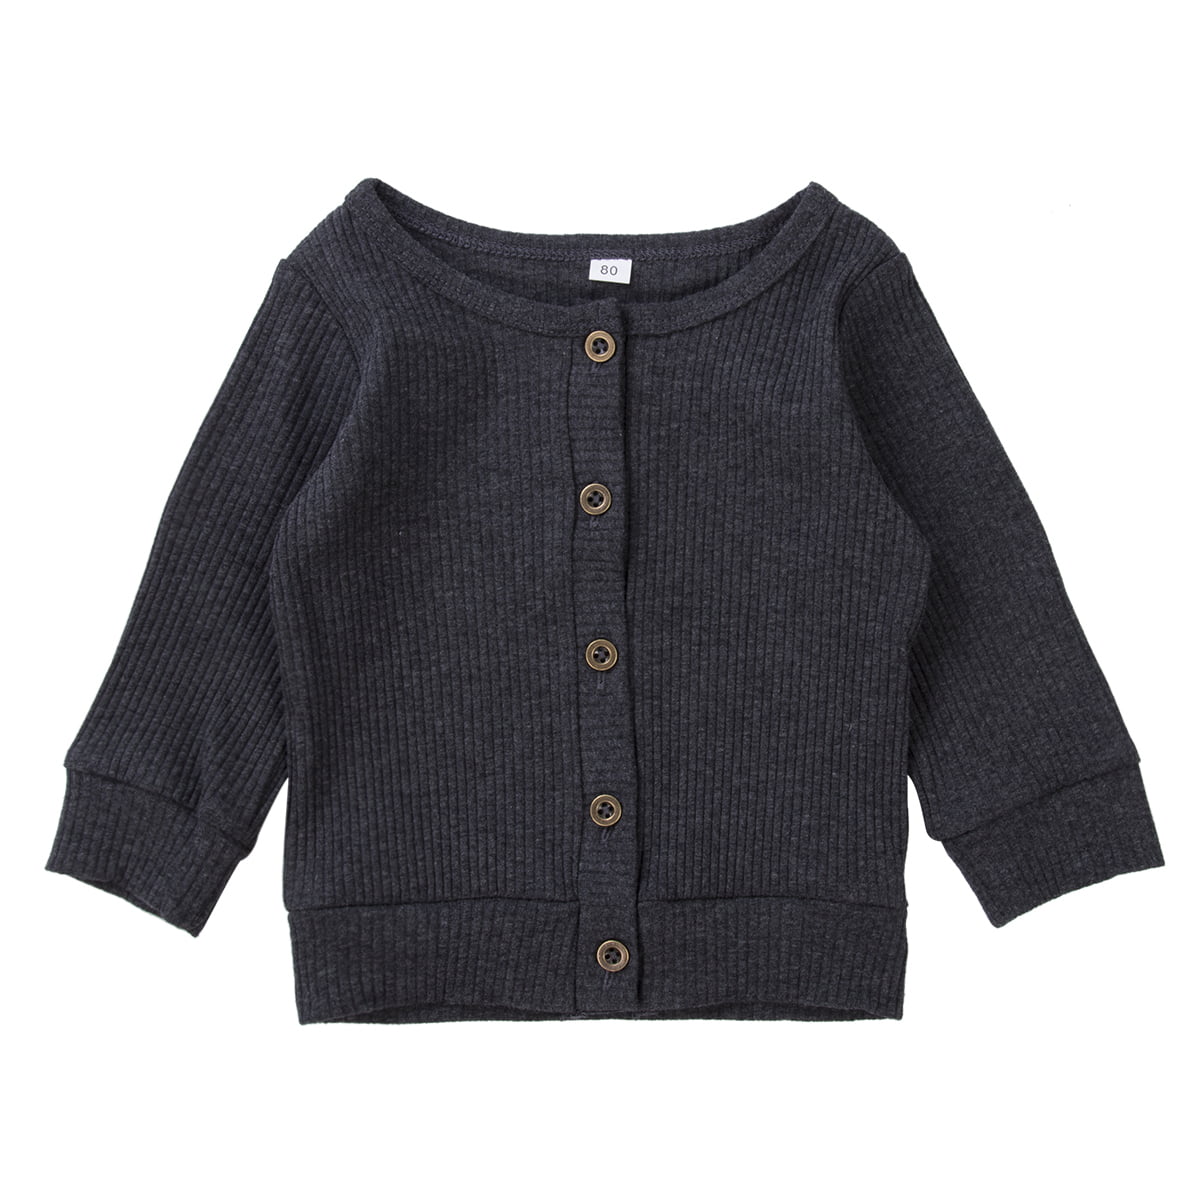 Toddler Kids Baby Boy Girl Long Sleeve Knit Sweater Cardigan Jacket Coat Outwear 